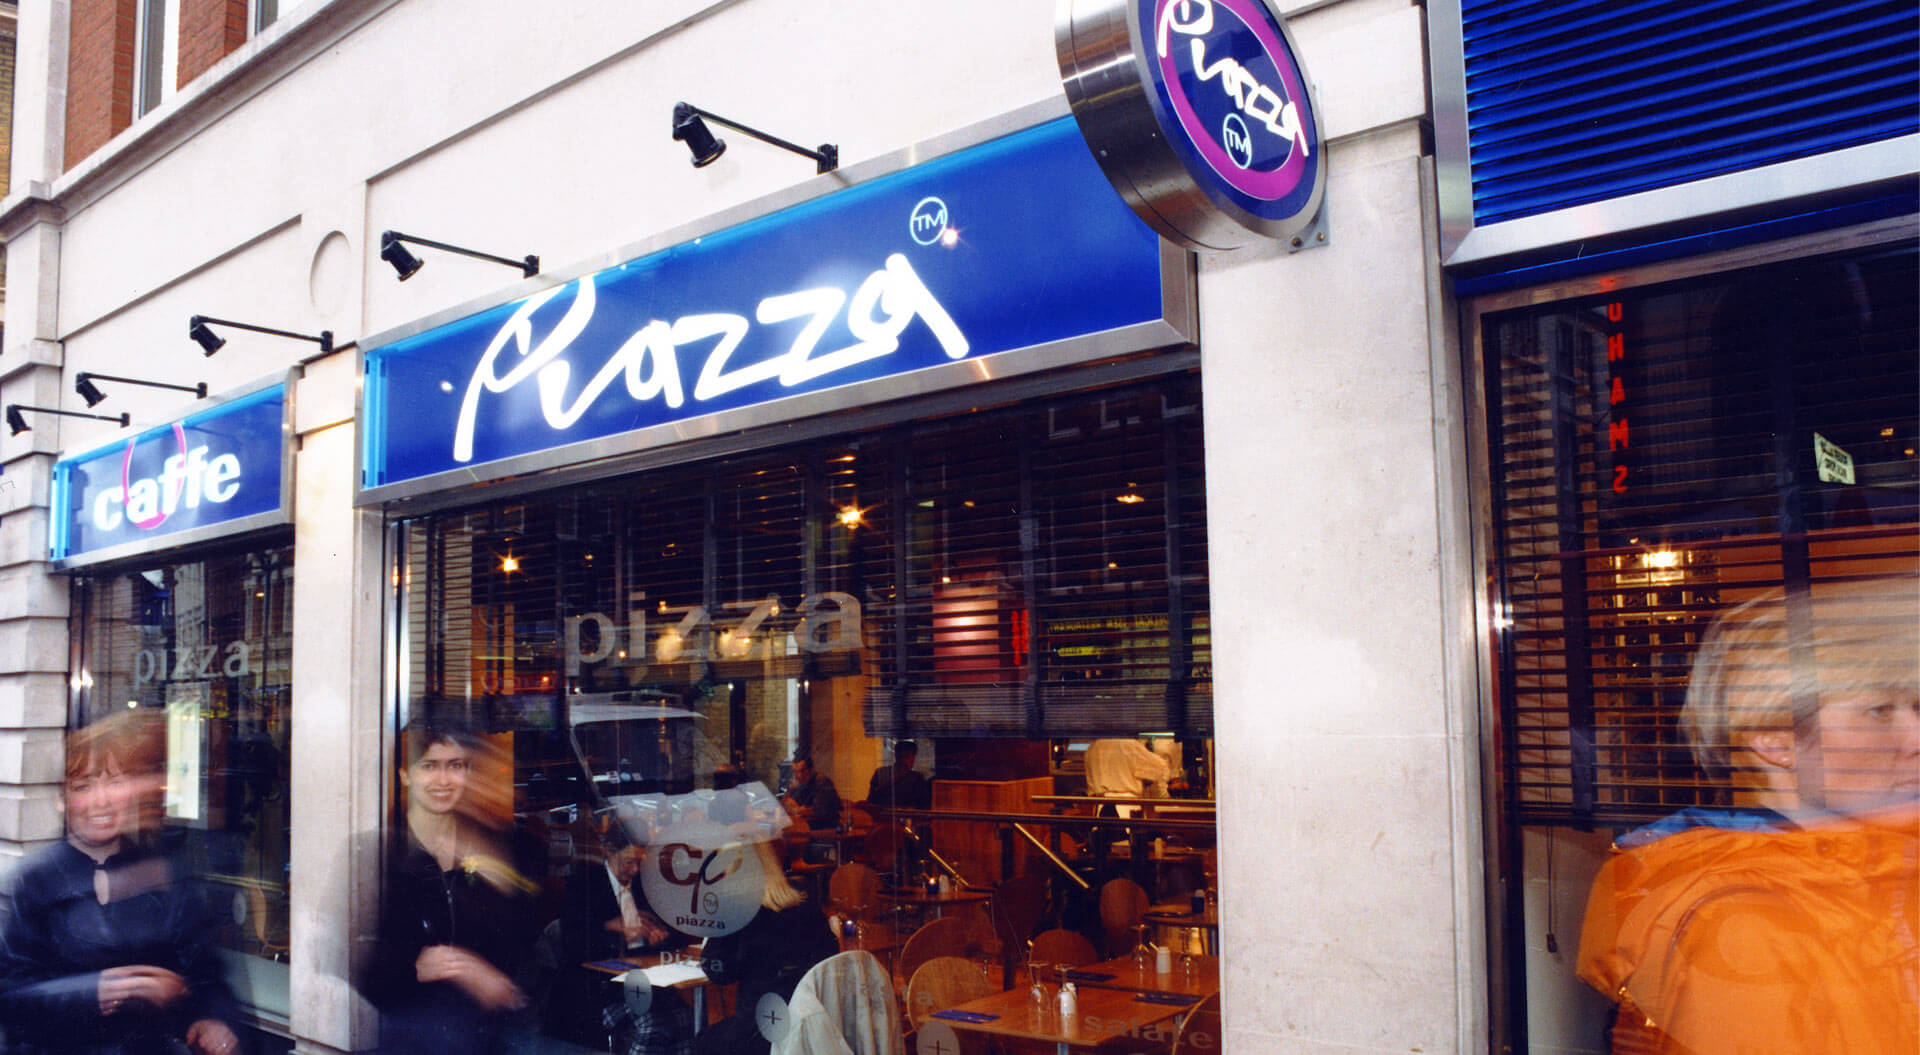 Interior design restaurant, marketing strategy, PR promotion pizza pasta, bars, cafes, branding agency - Caffe Piazza